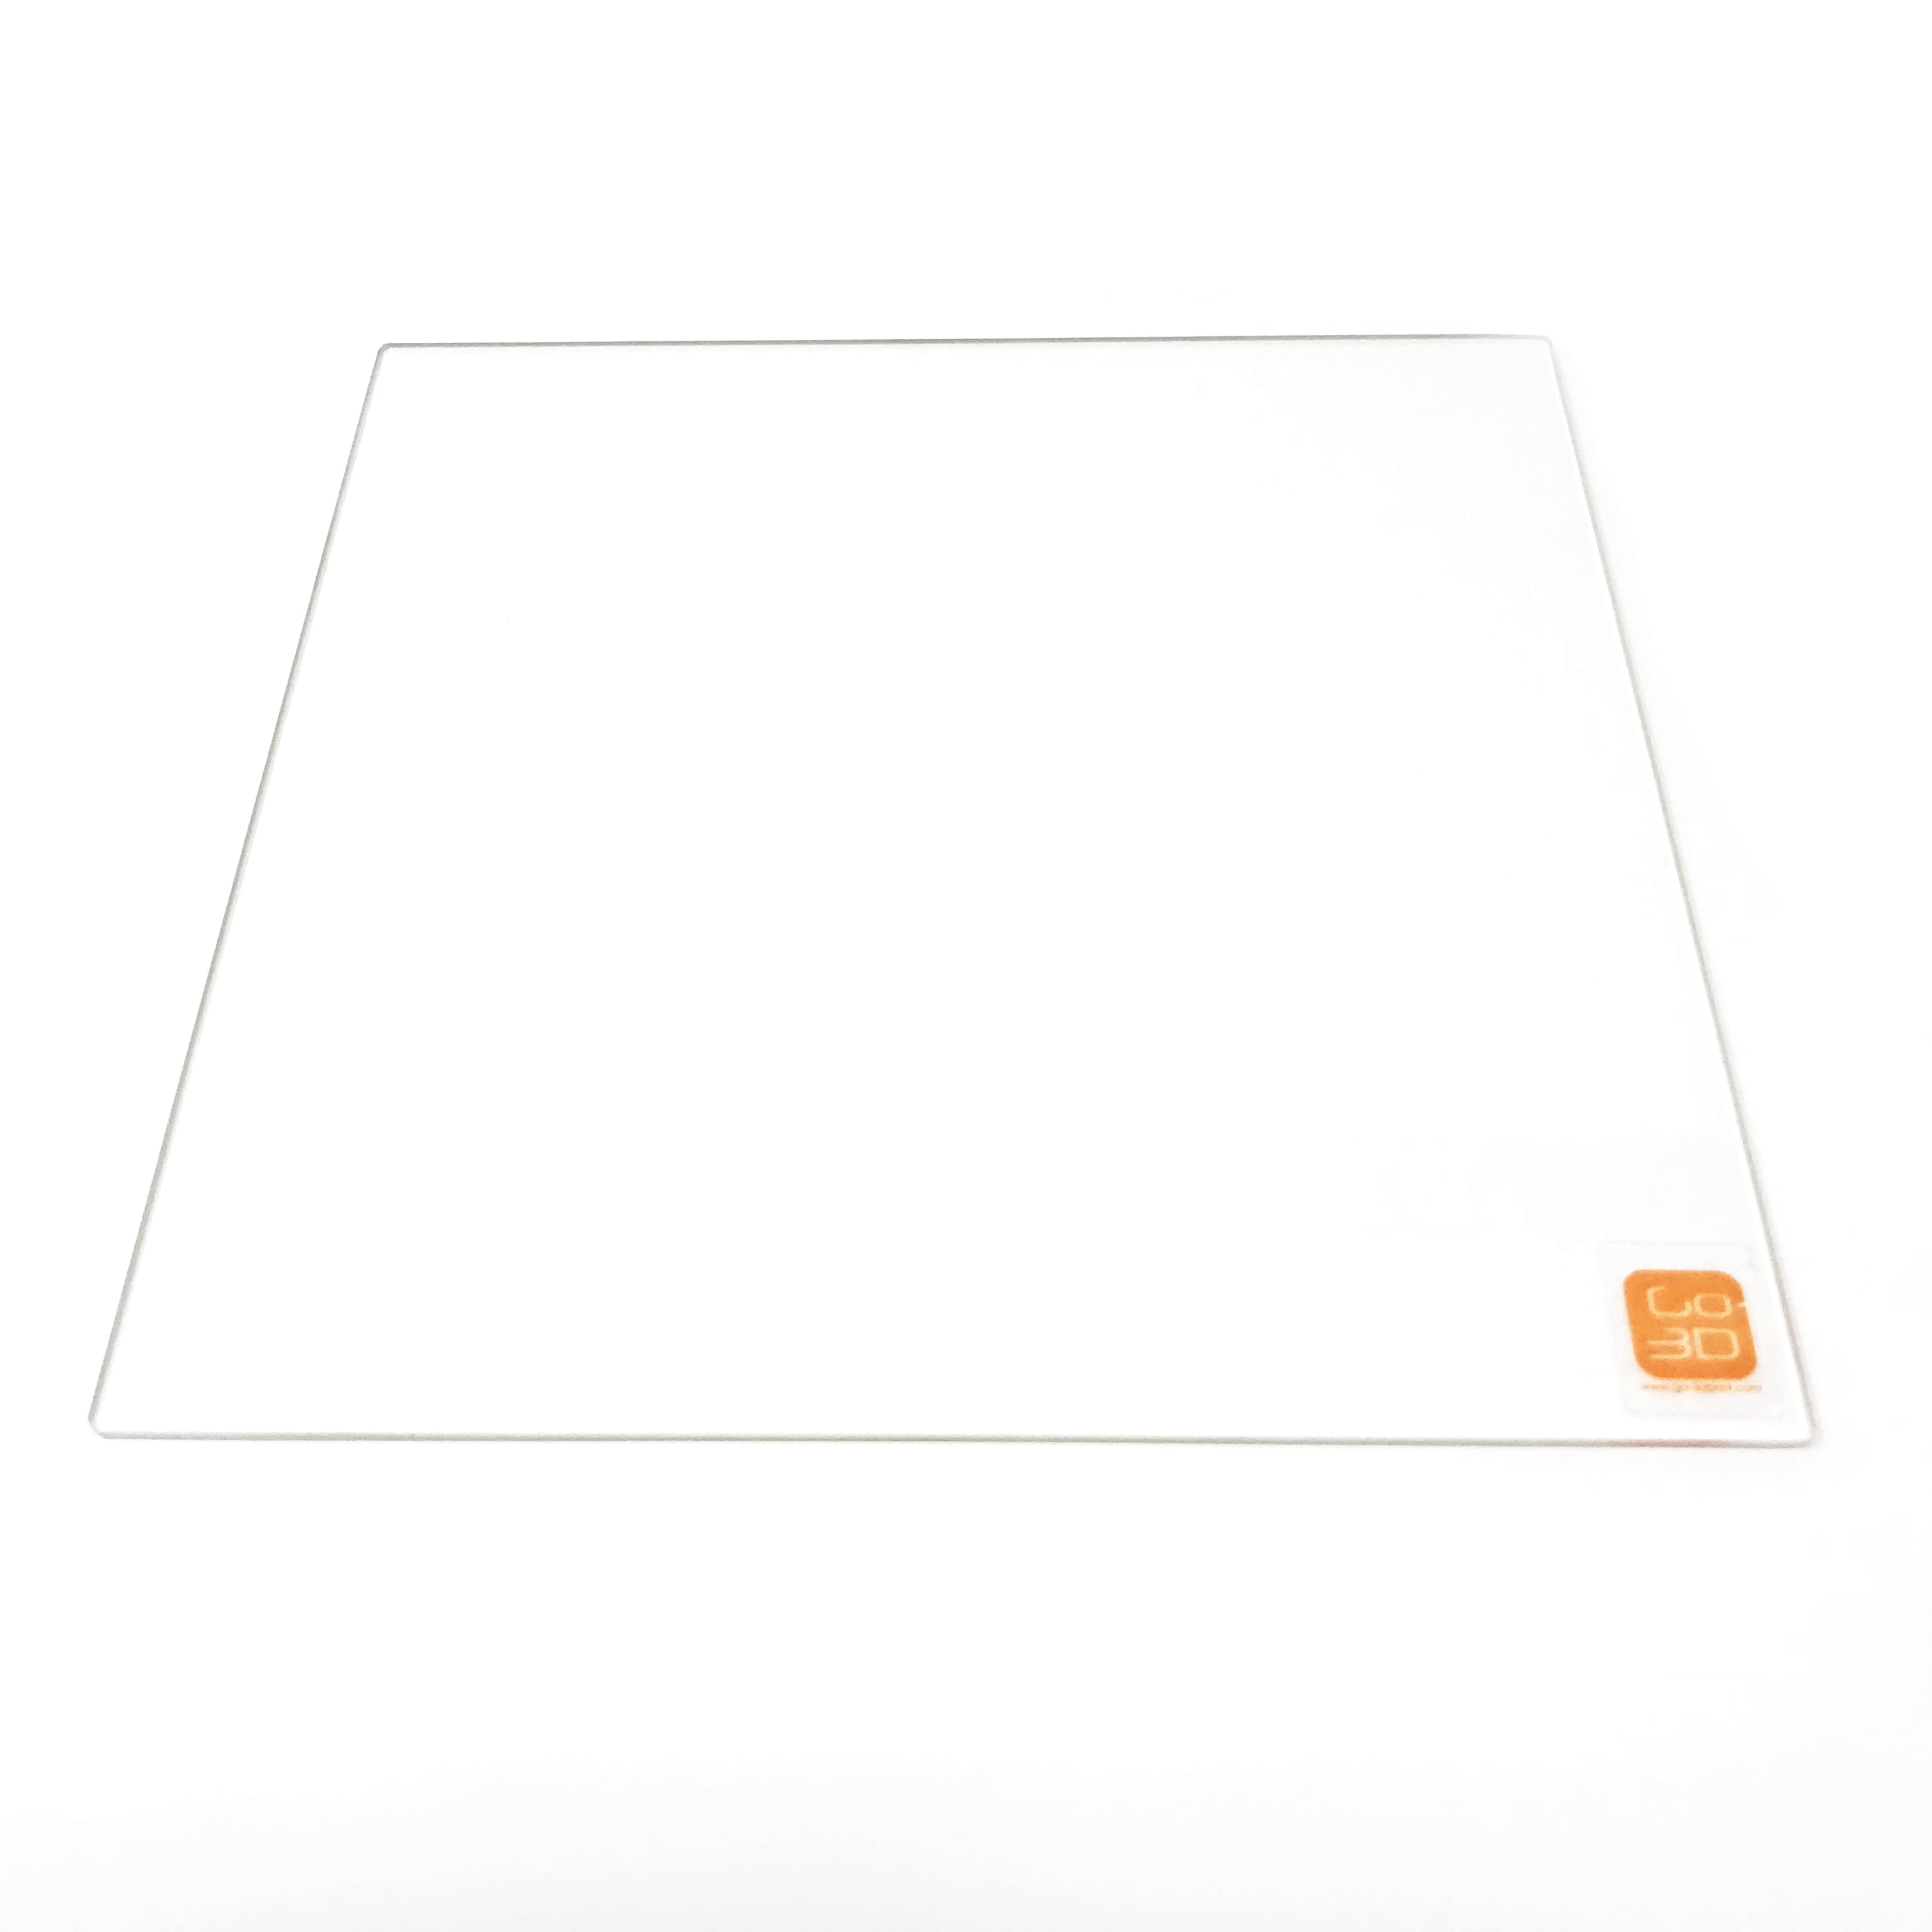 220mm x 220mm Borosilicate Glass Plate Bed Flat Polished Edge for MK2 MK3 Reprap